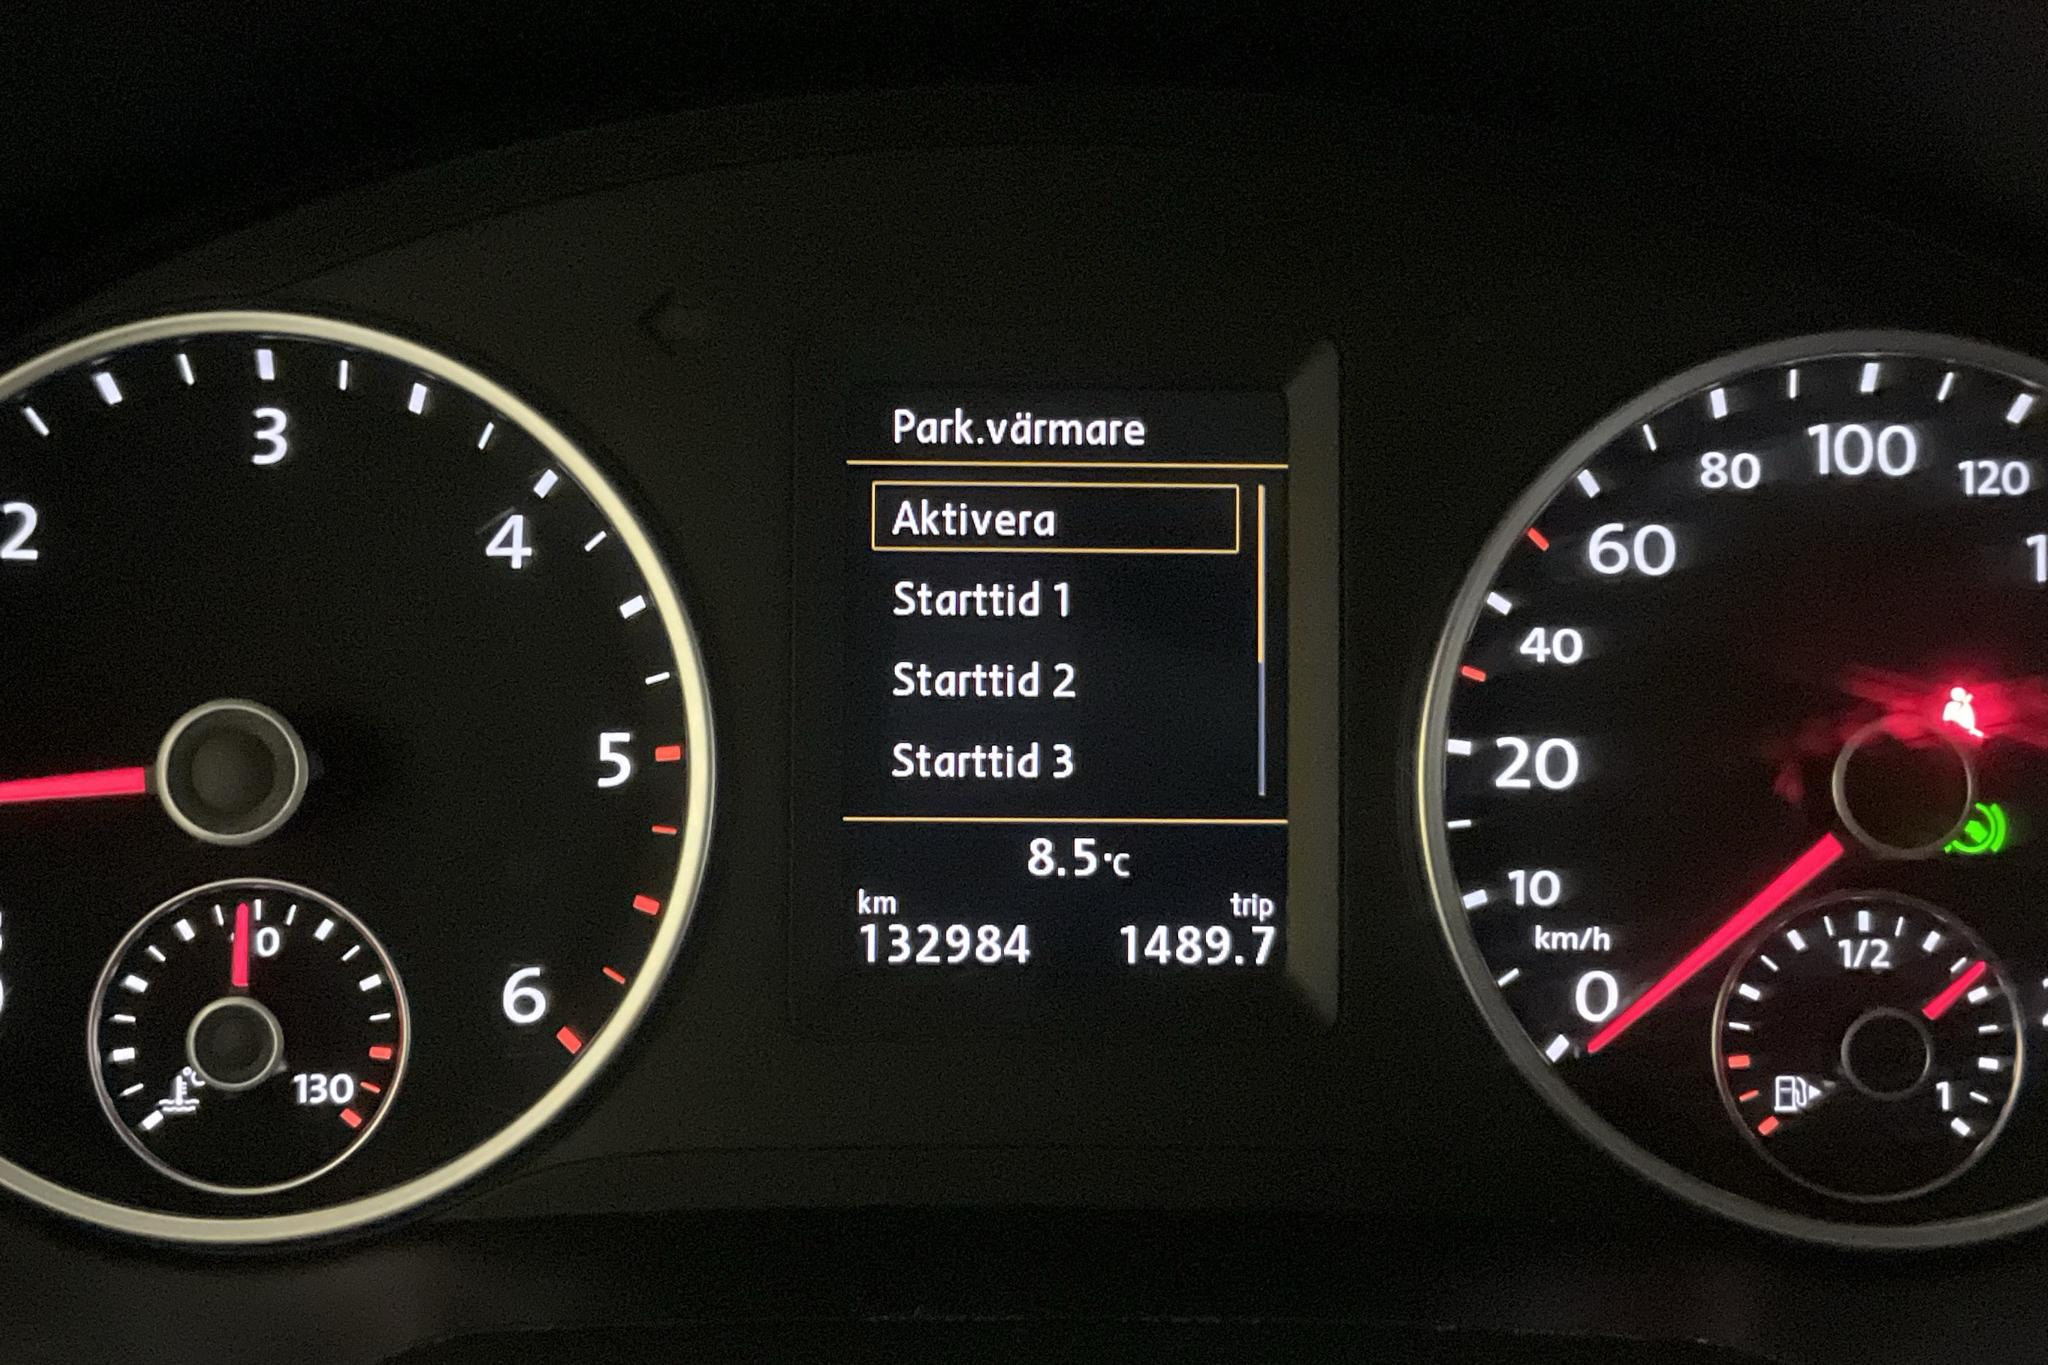 VW Tiguan 2.0 TDI 4MOTION BlueMotion Technology (184hk) - 132 980 km - Automatic - Light Brown - 2016